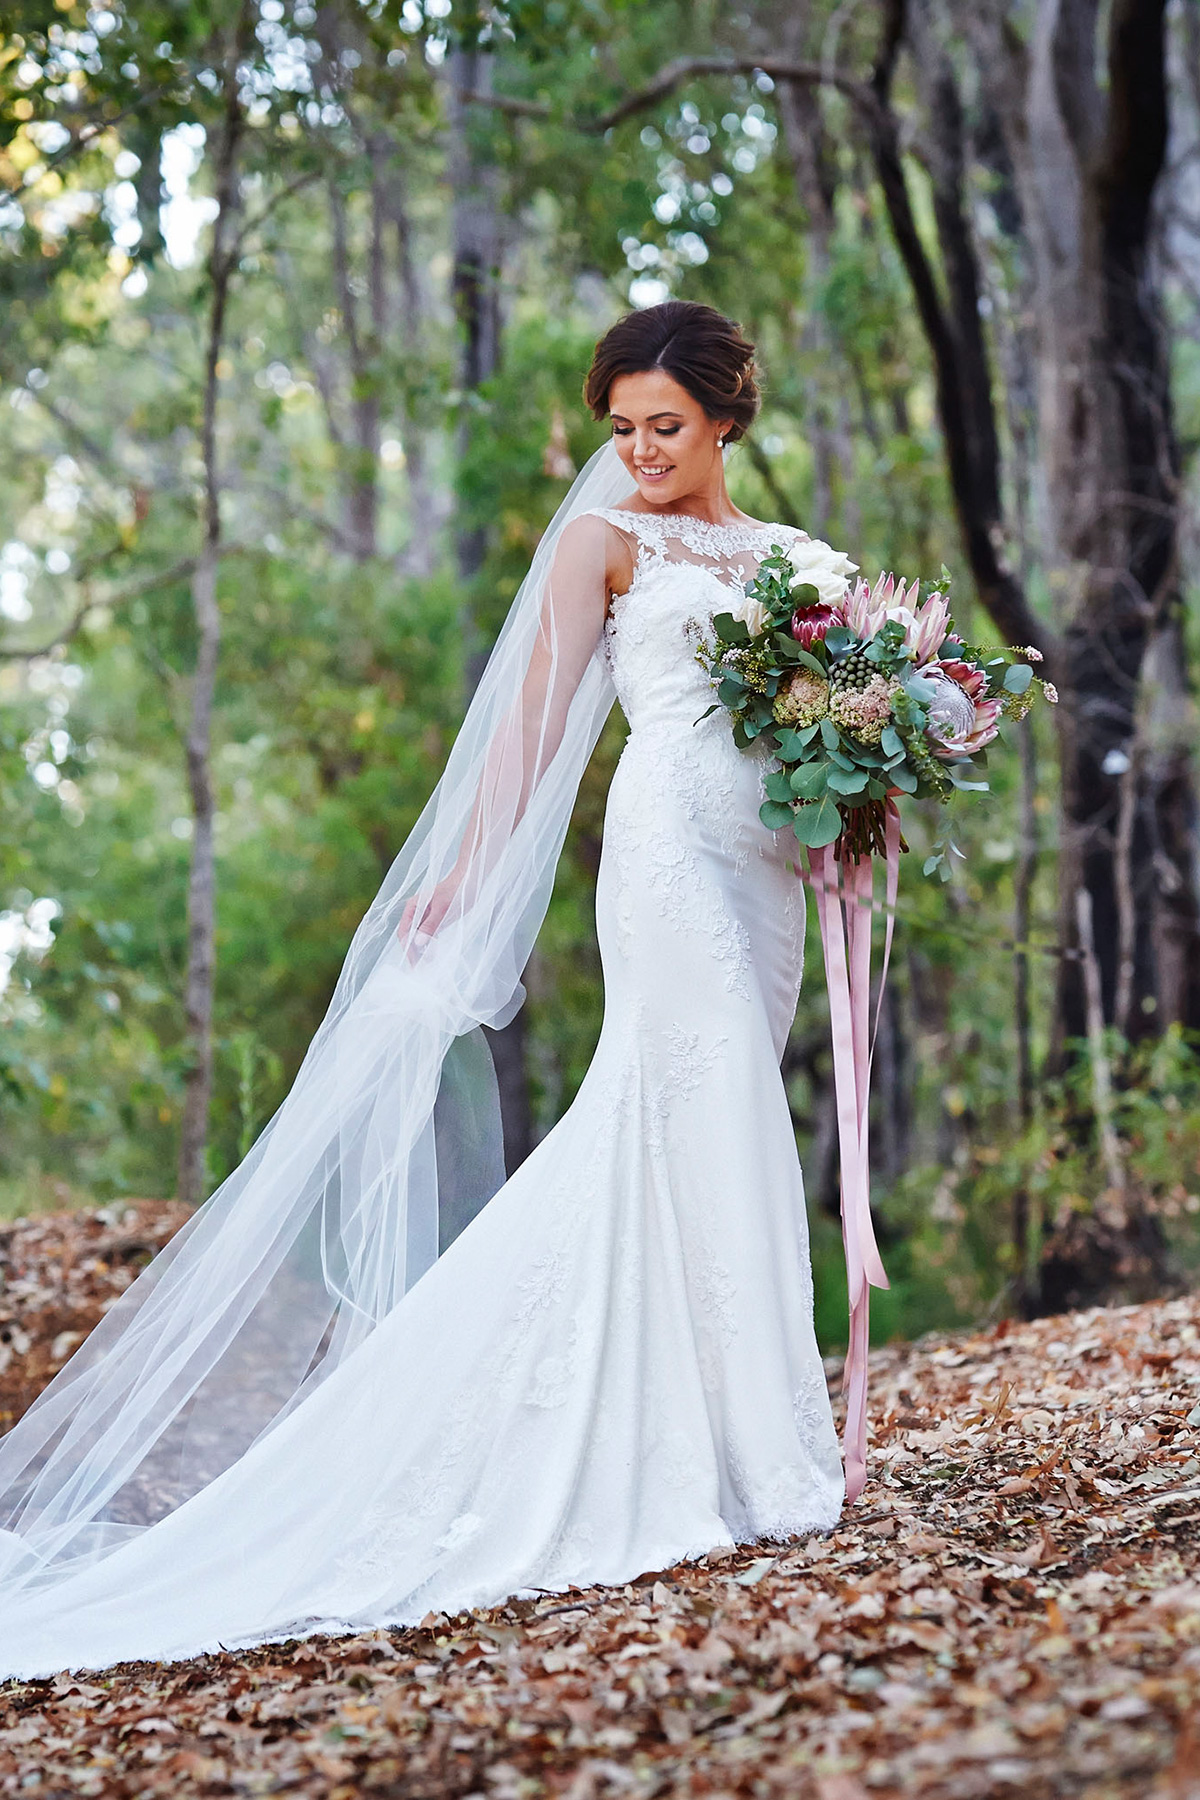 Adelaide_Ben_Rustic-Vineyard-Wedding_Peter-Edwards-Photography_SBS_017